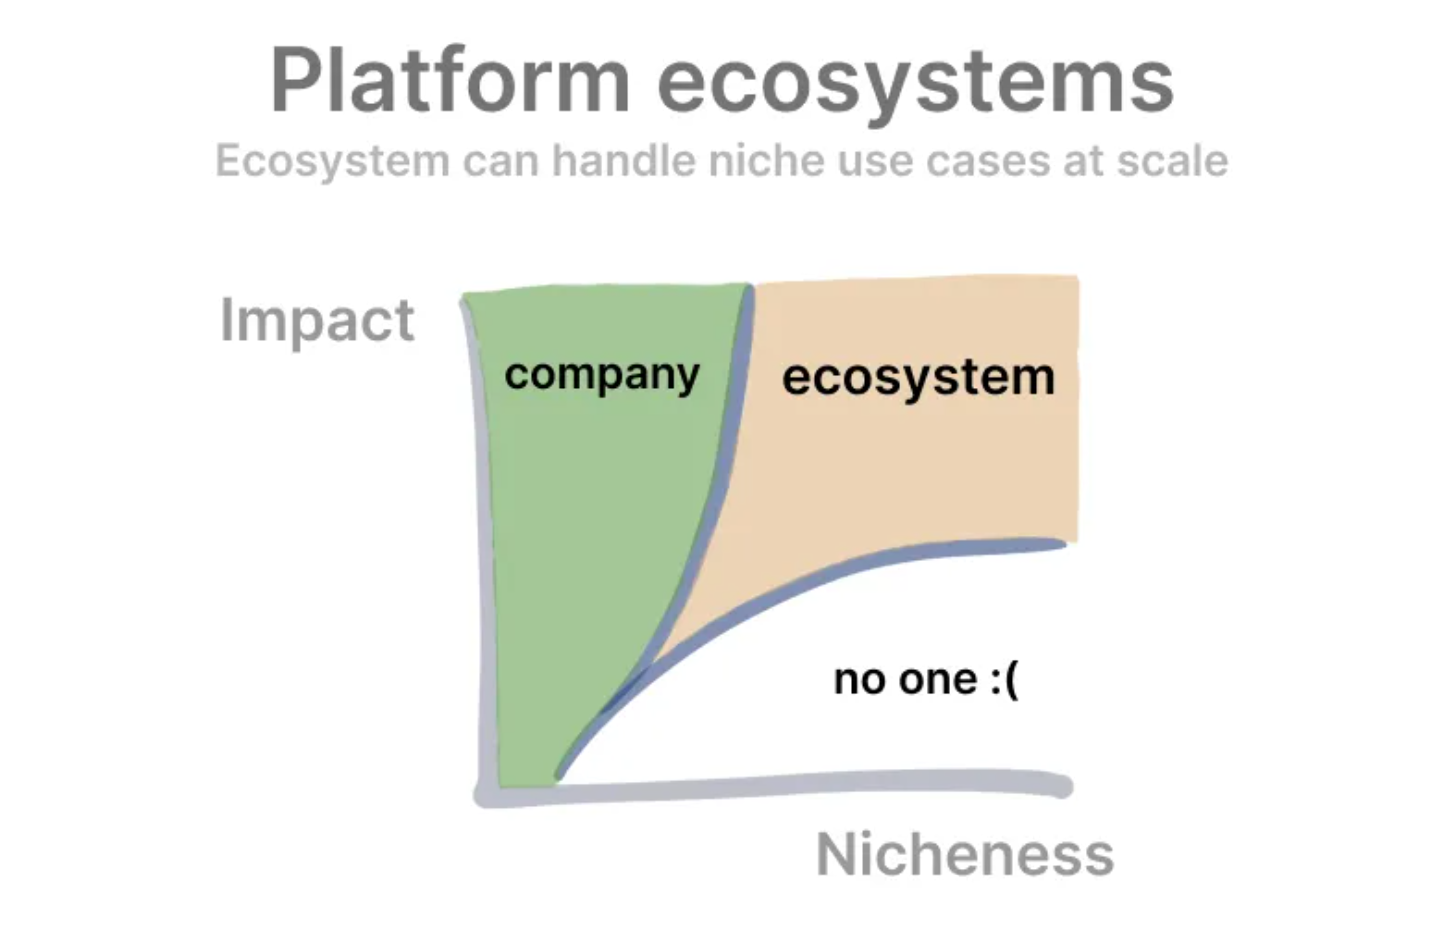 Kevin Kwok’s diagram on platform ecosystems